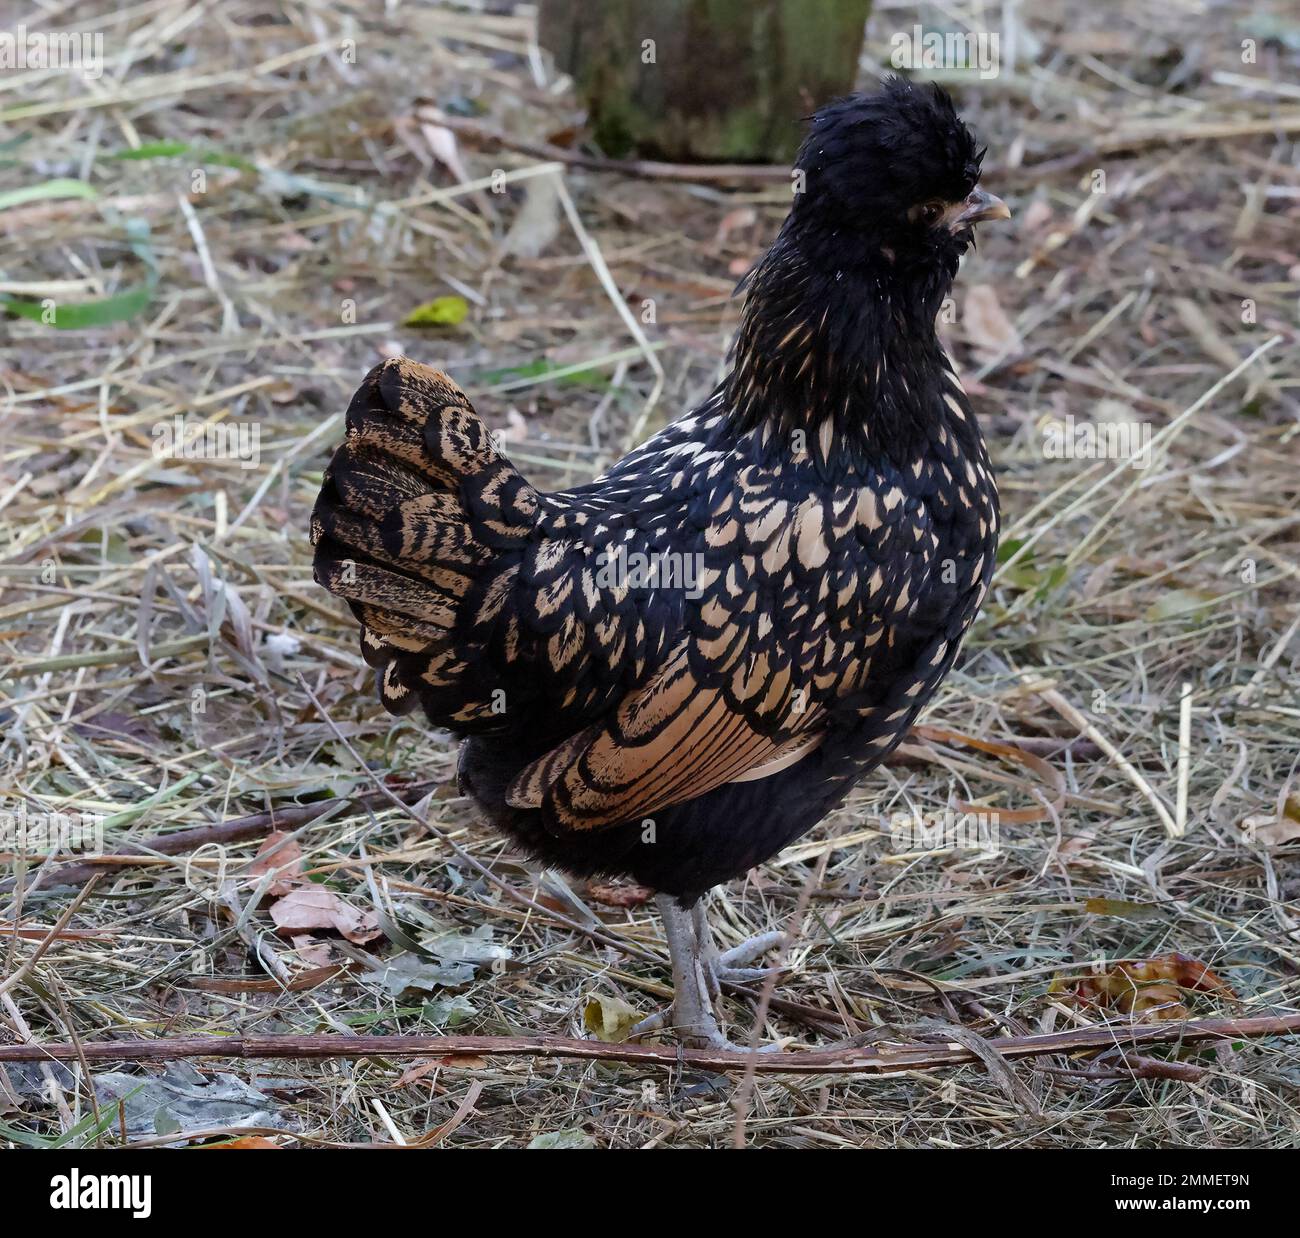 Pavlovskaja, gold spangled chicken, an old domestic breed originated in Russia. Stock Photo